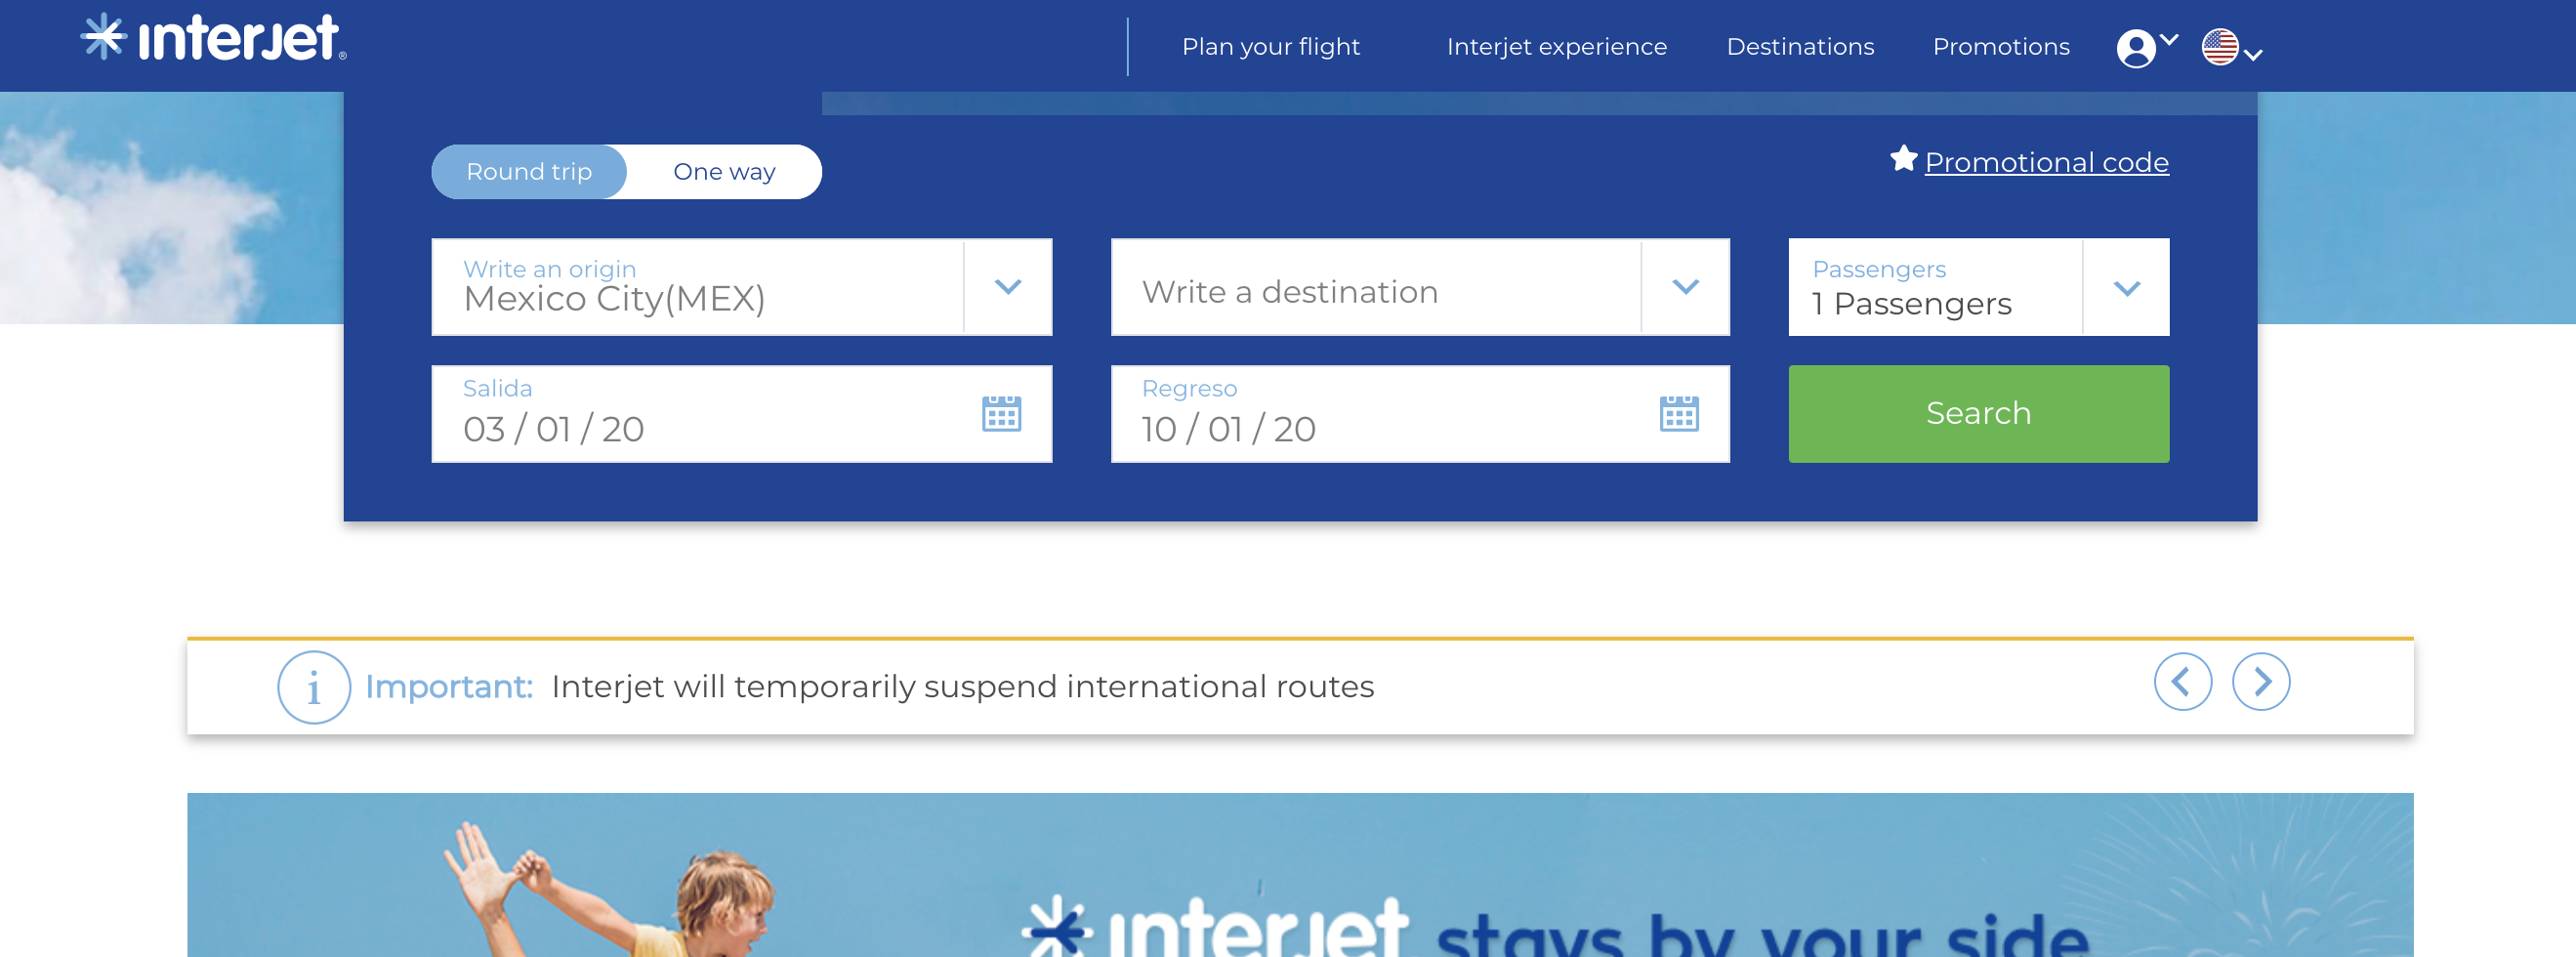 Interjet airlines website January 2021